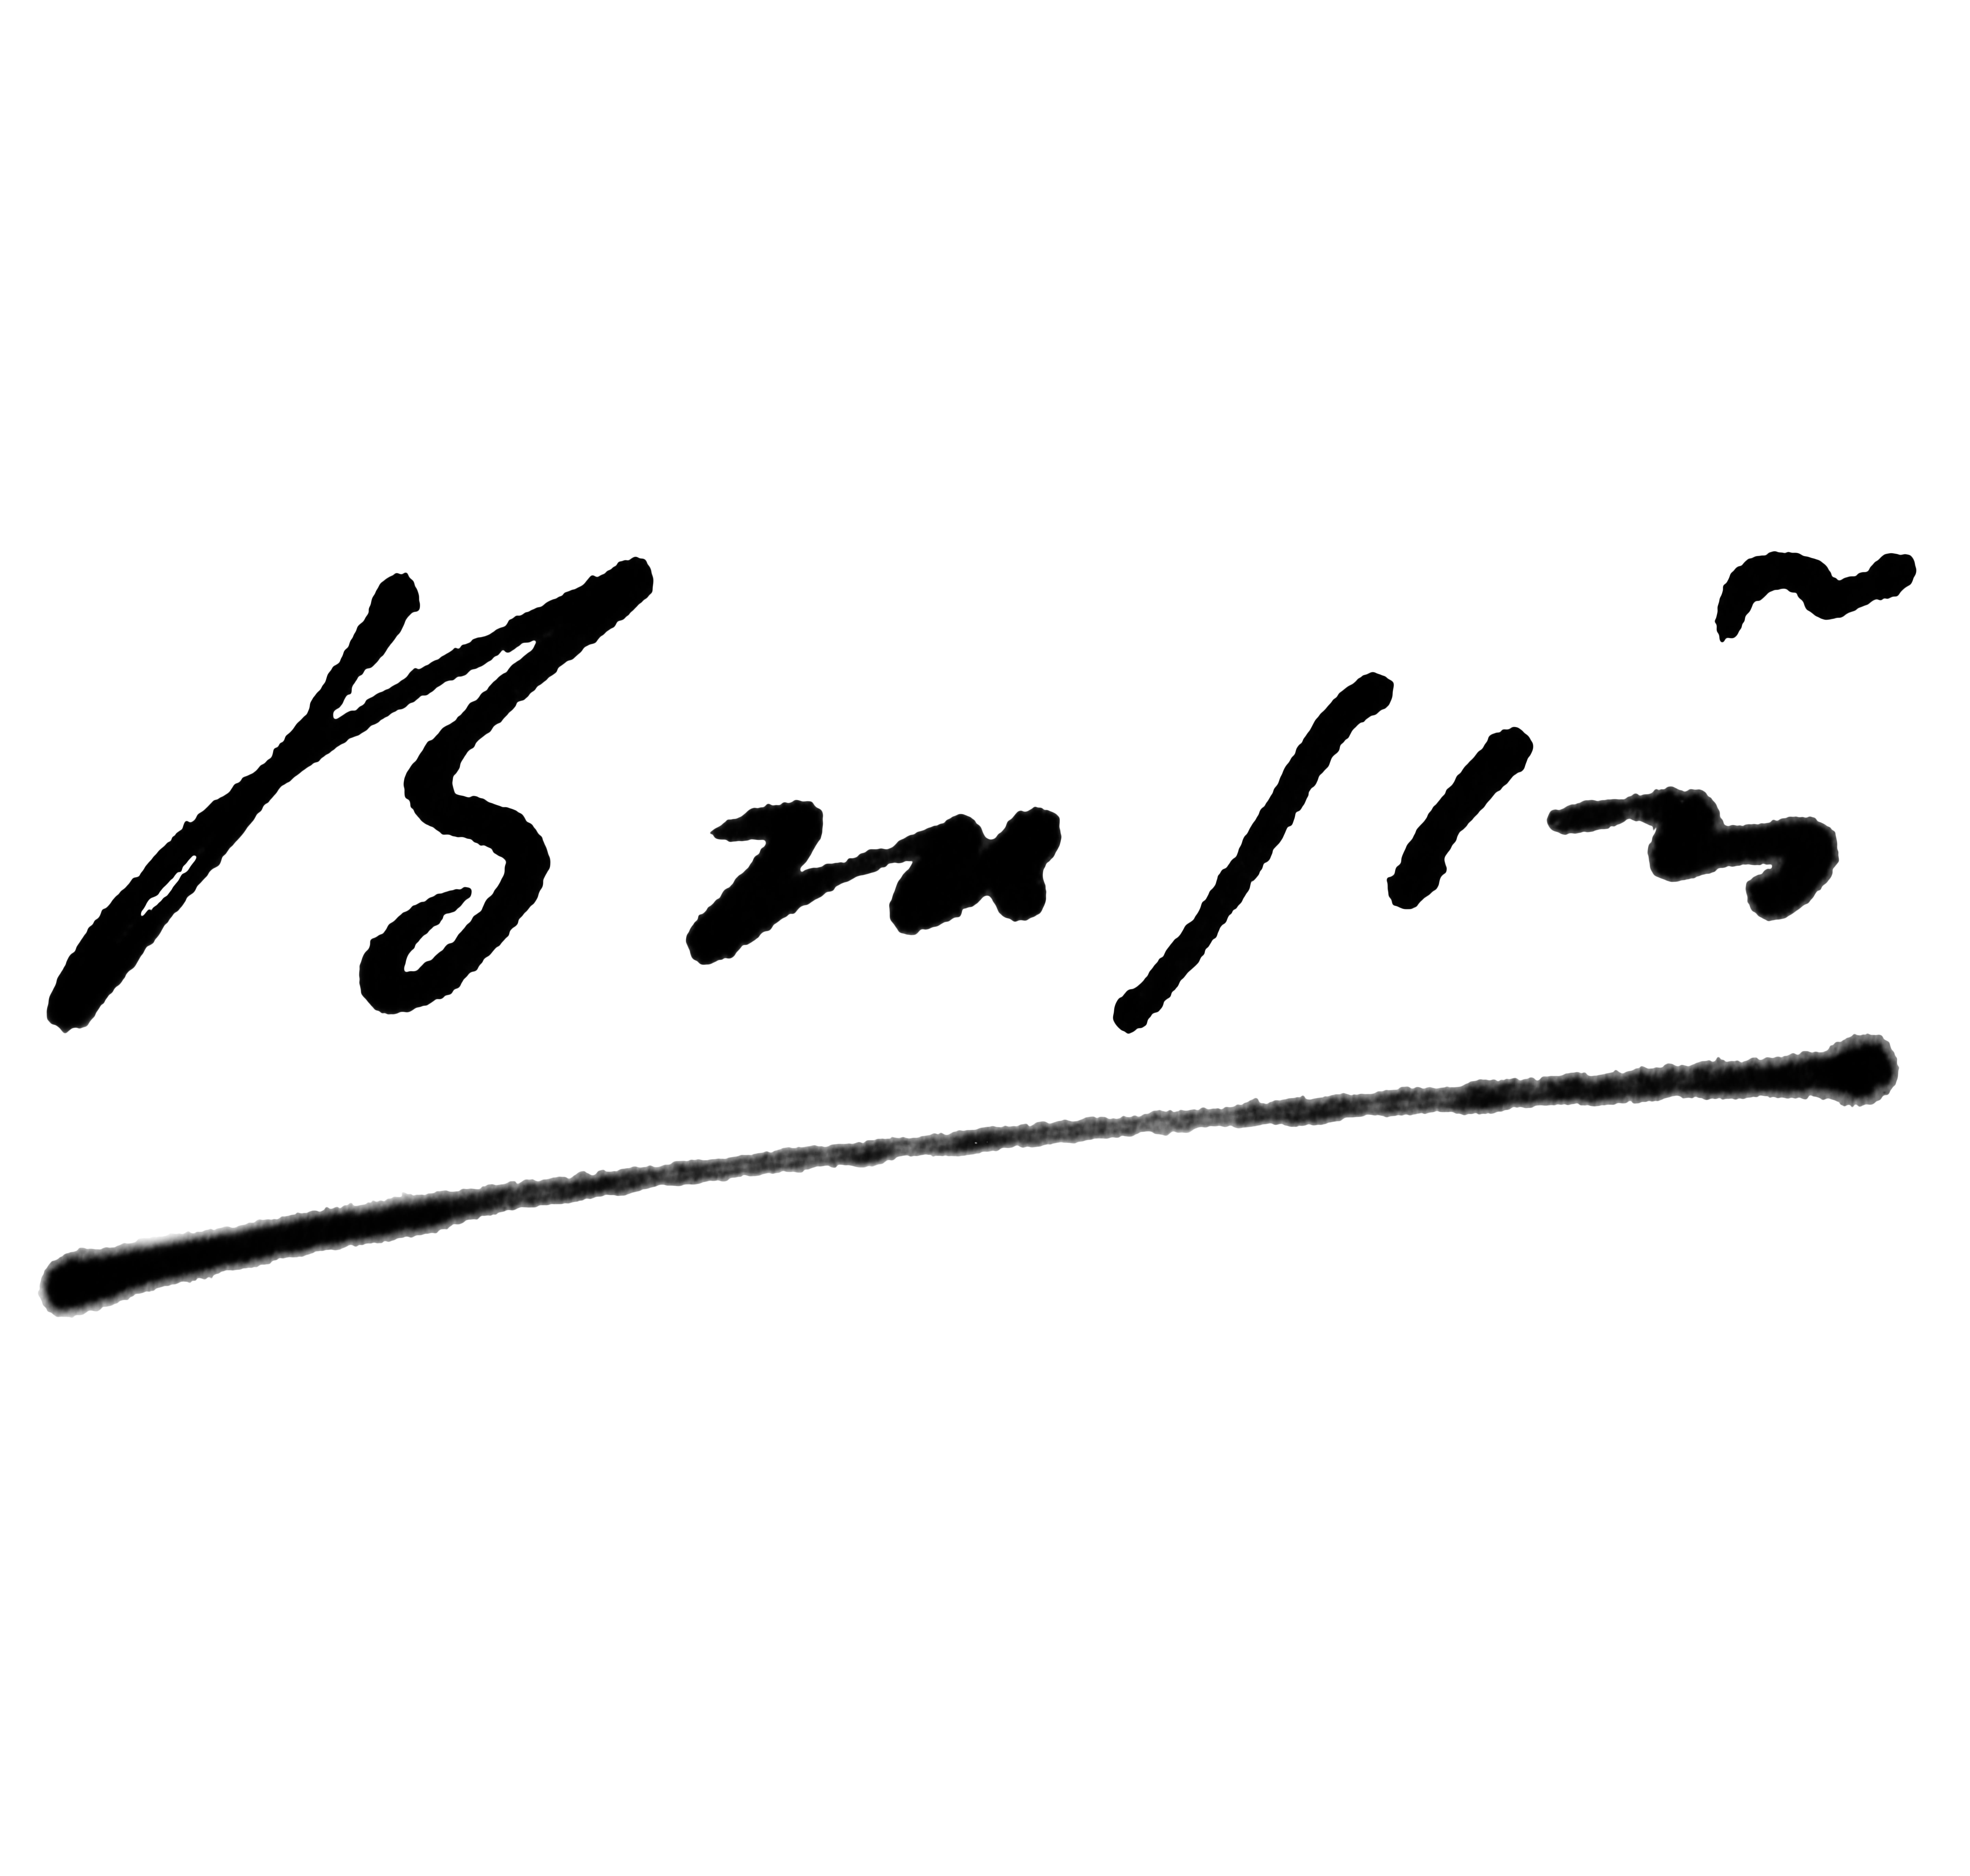 photograph of Brassai's signature